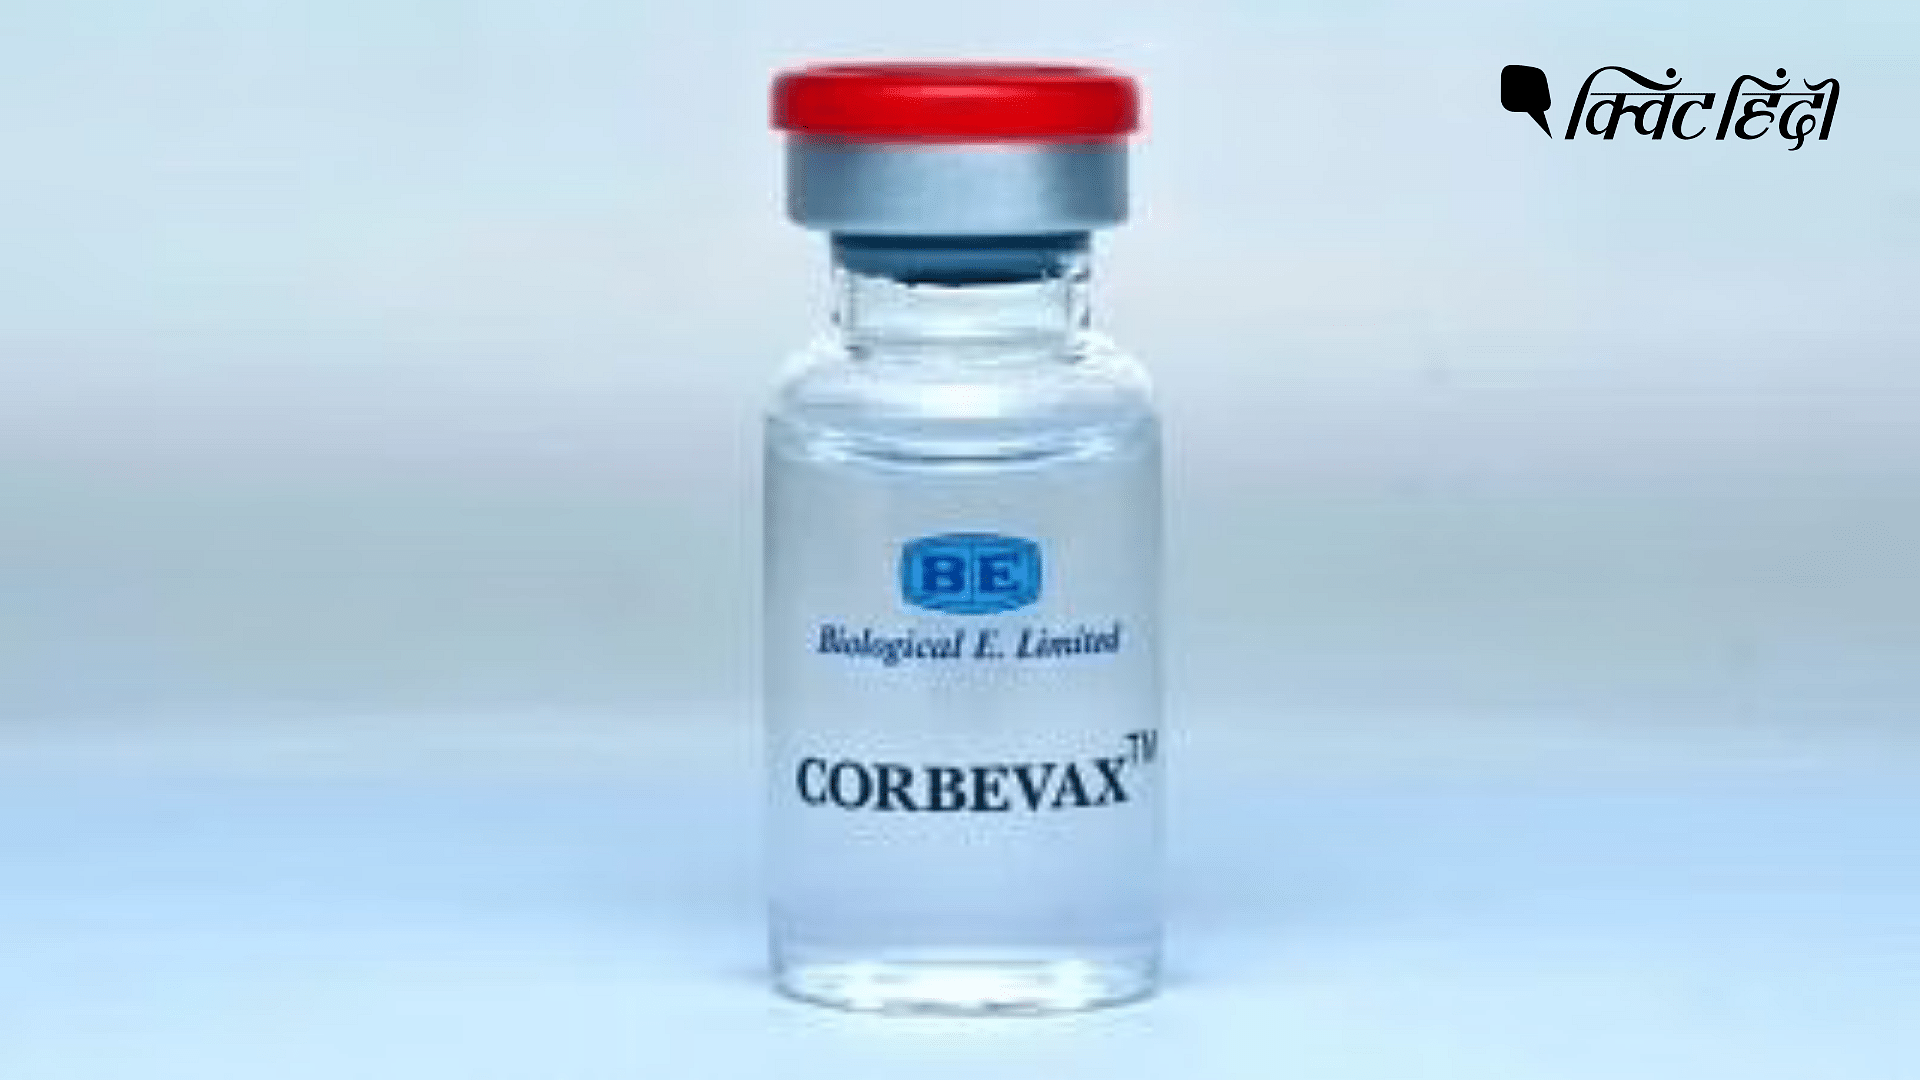 <div class="paragraphs"><p>Biological E. ने घटाया कोरोना वैक्सीन का रेट, 250 रूपए में मिलेगी एक डोज</p></div>